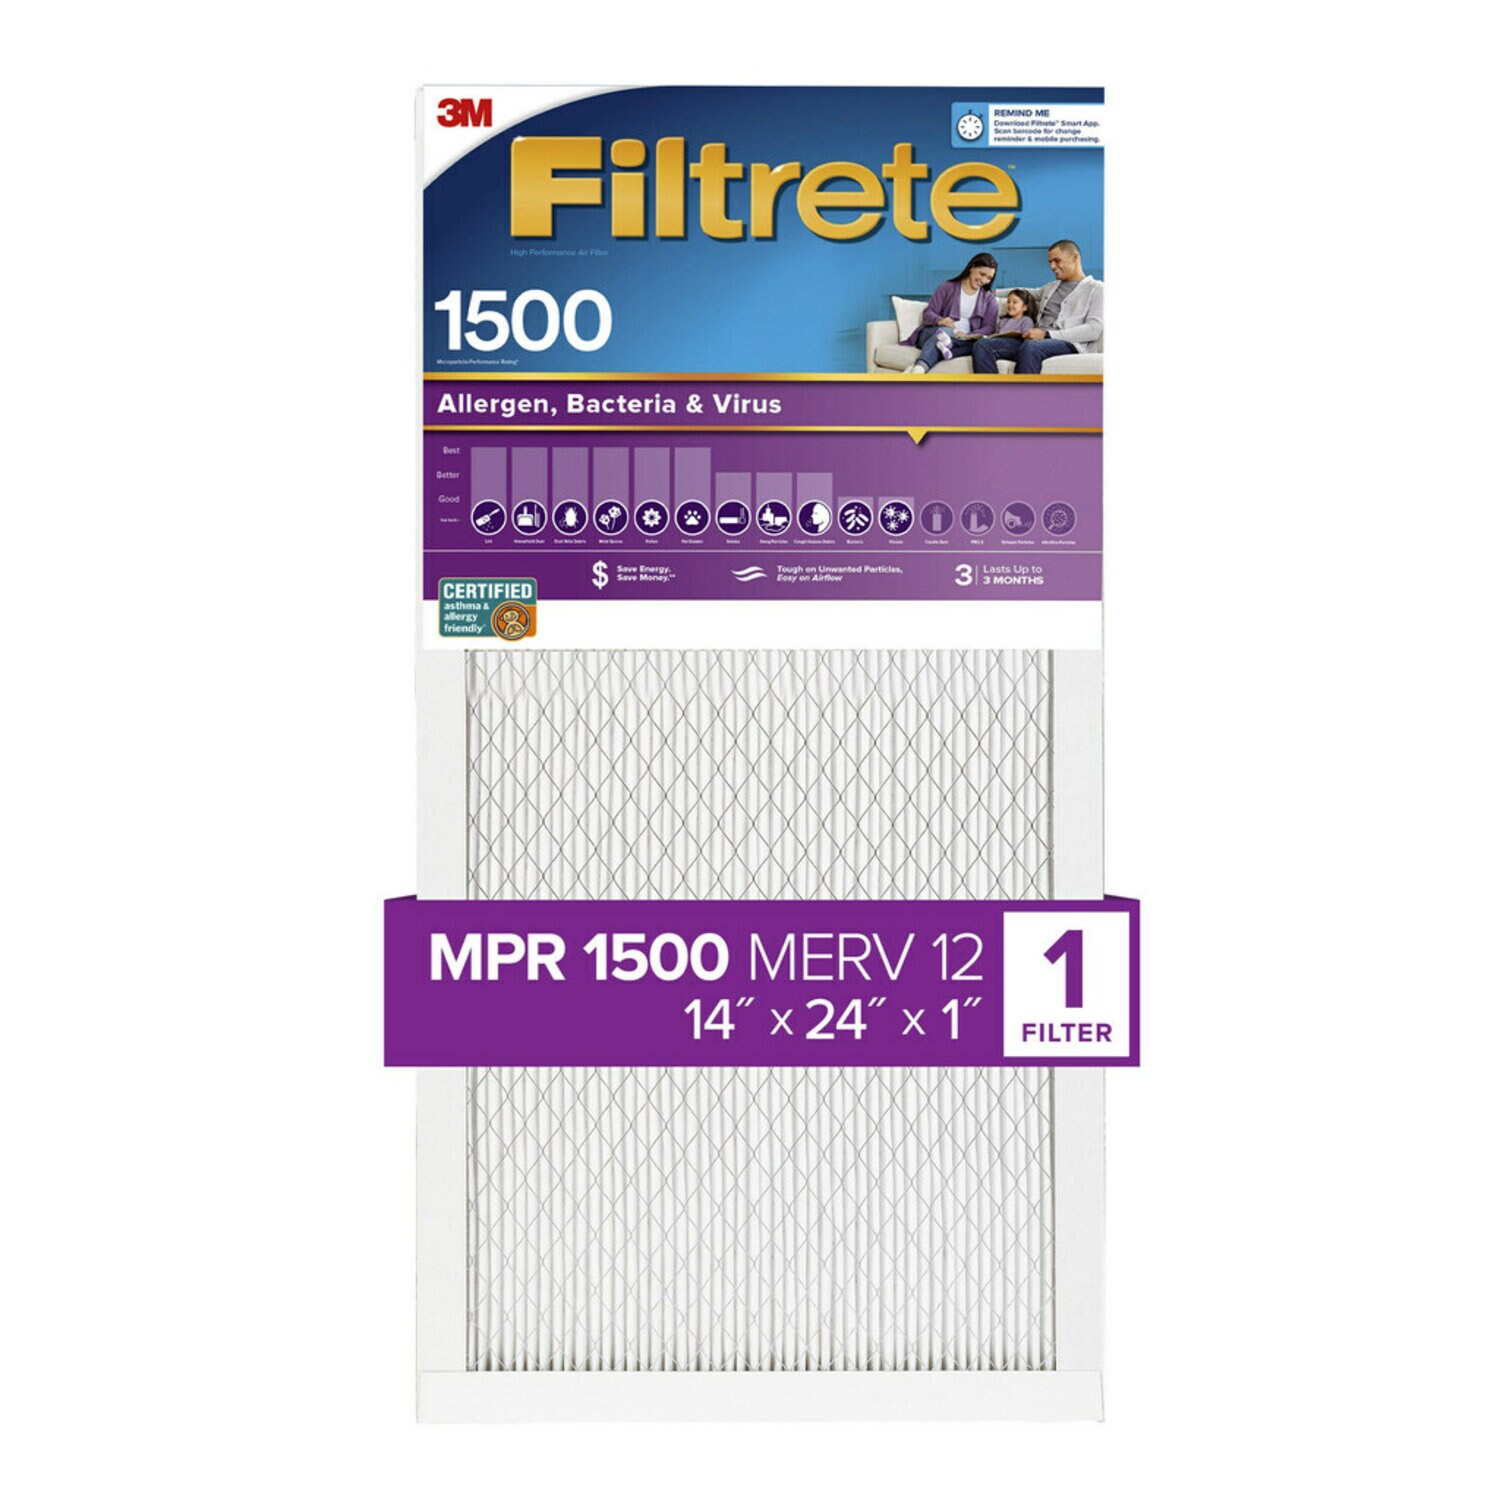 7100220132 - Filtrete High Performance Air Filter 1500 MPR UP23-4, 14 in x 24 in x 1 in (35.5 cm x 60.9 cm x 2.5 cm)